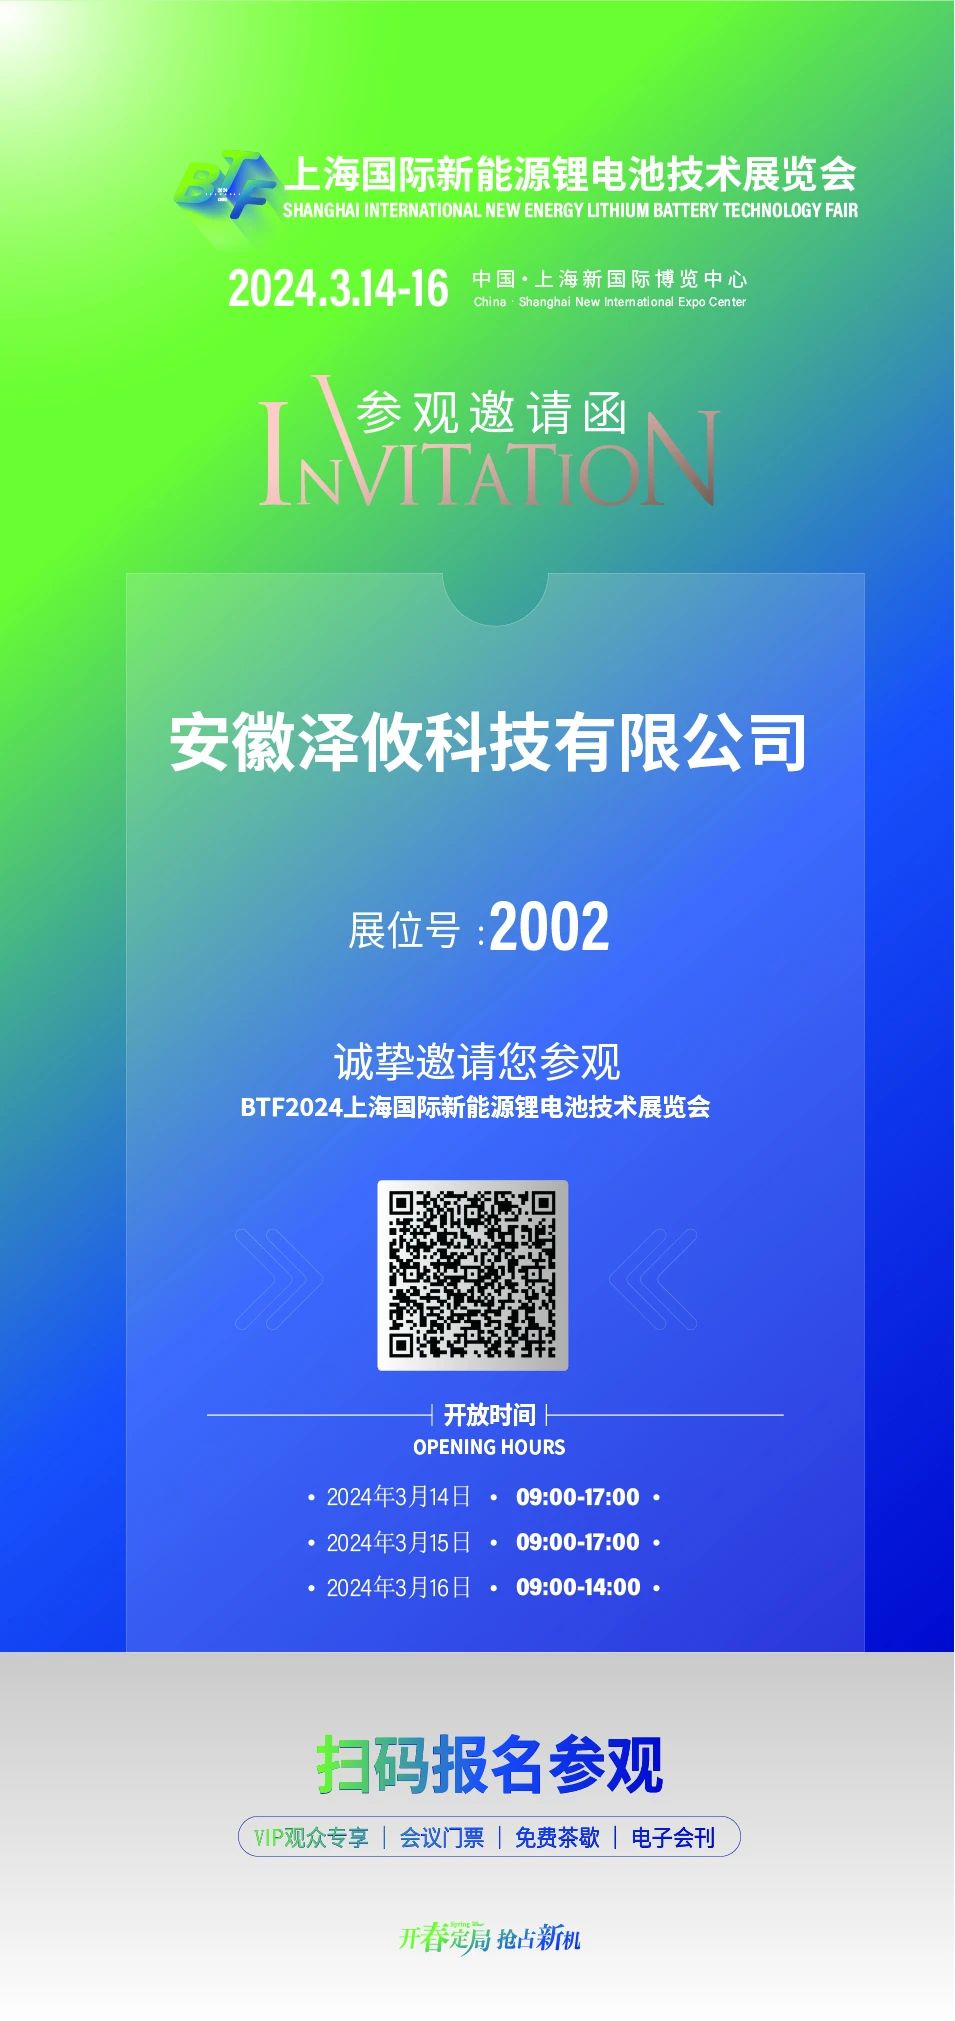 BTF2024上海国际新能源锂电池技术展